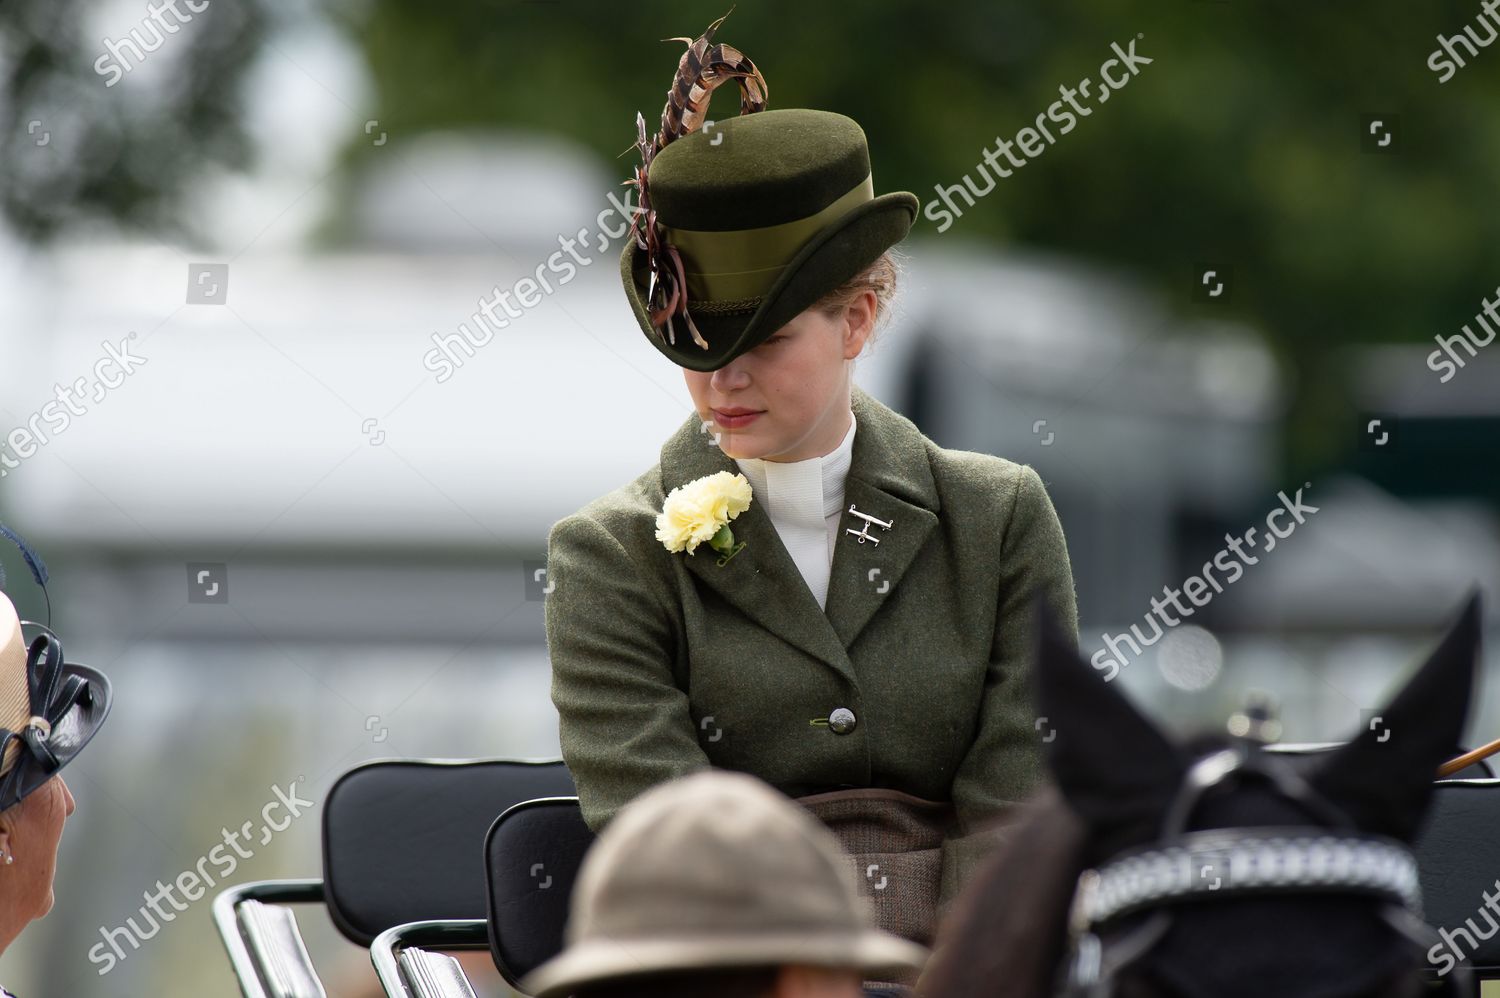 royal-windsor-horse-show-day-3-berkshire-uk-shutterstock-editorial-12195342x.jpg